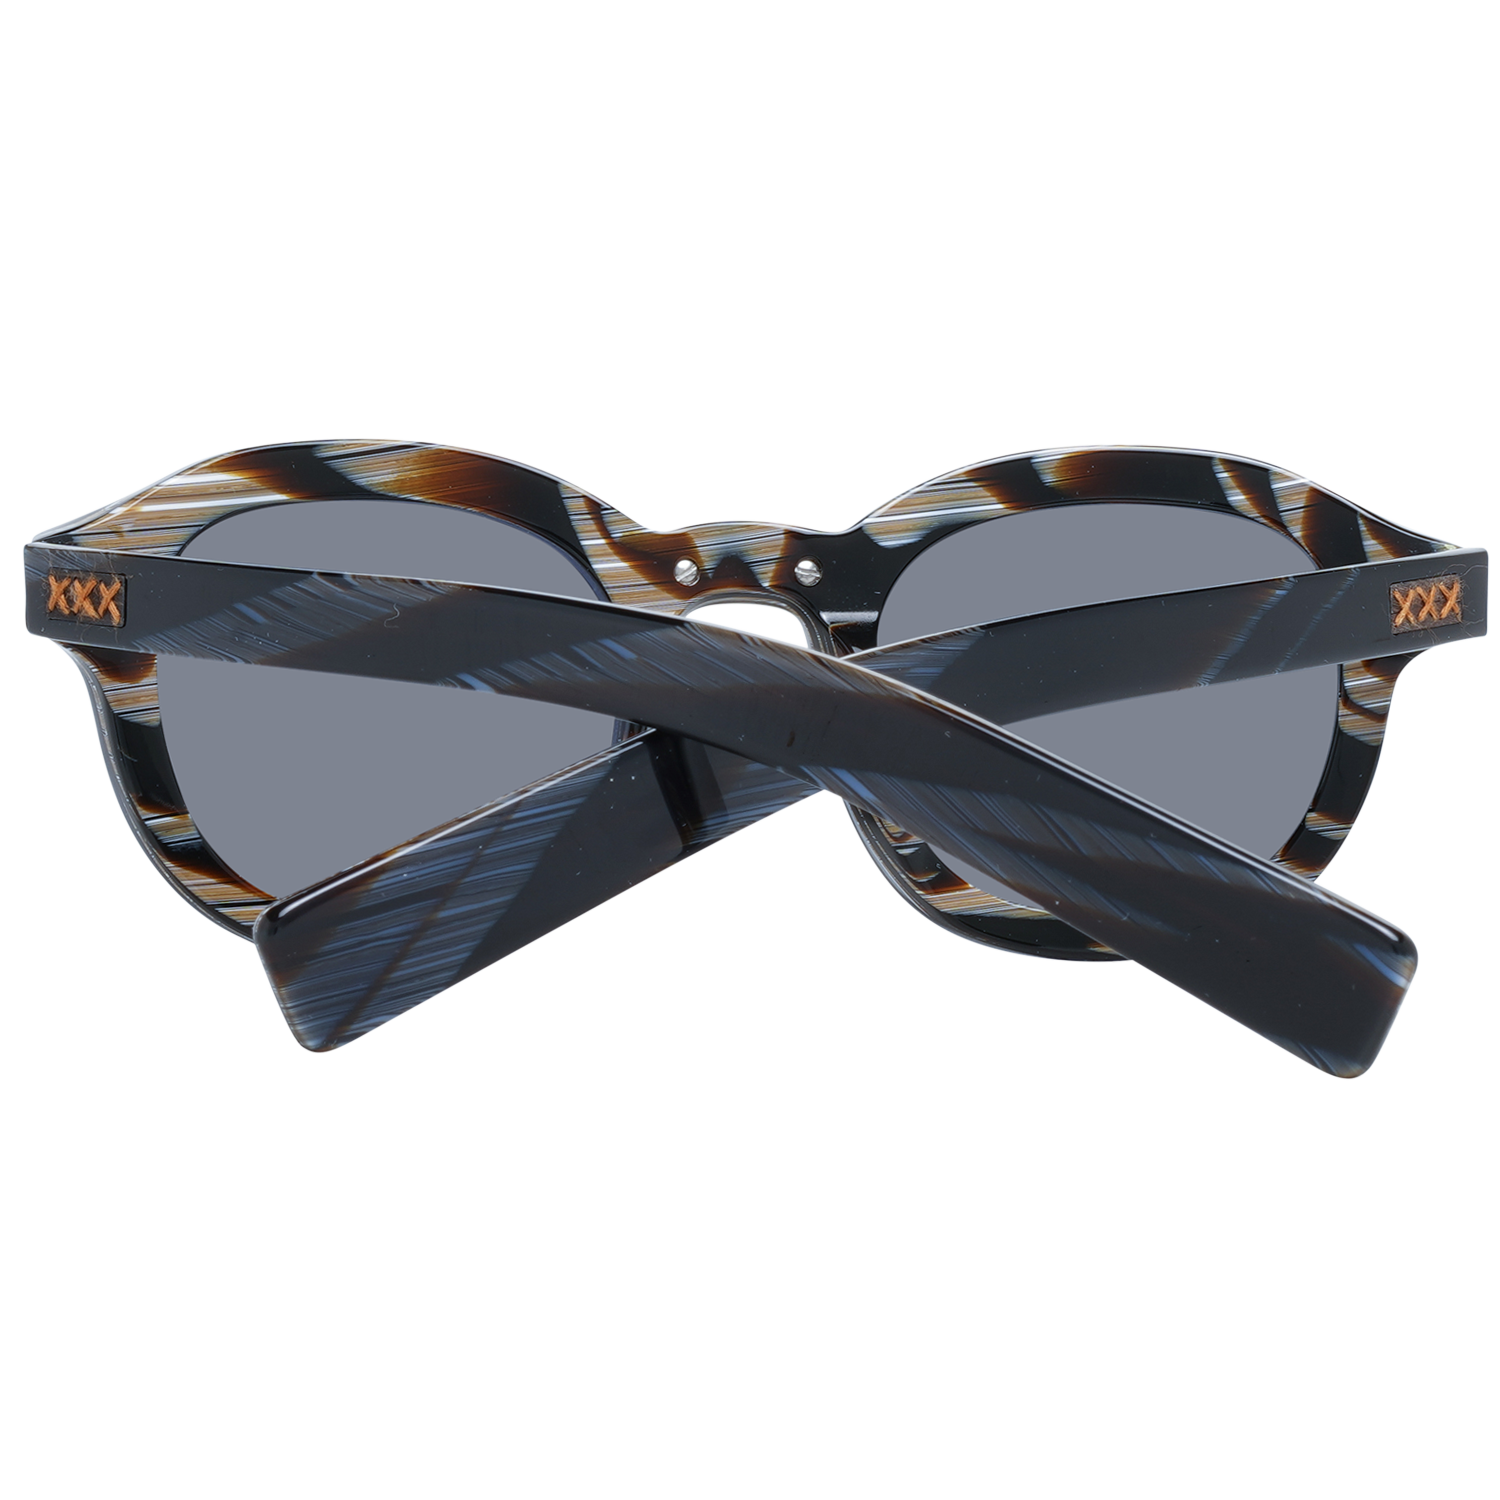 Zegna Couture Sunglasses Zegna Couture Sunglasses ZC0011 47 92A Eyeglasses Eyewear UK USA Australia 